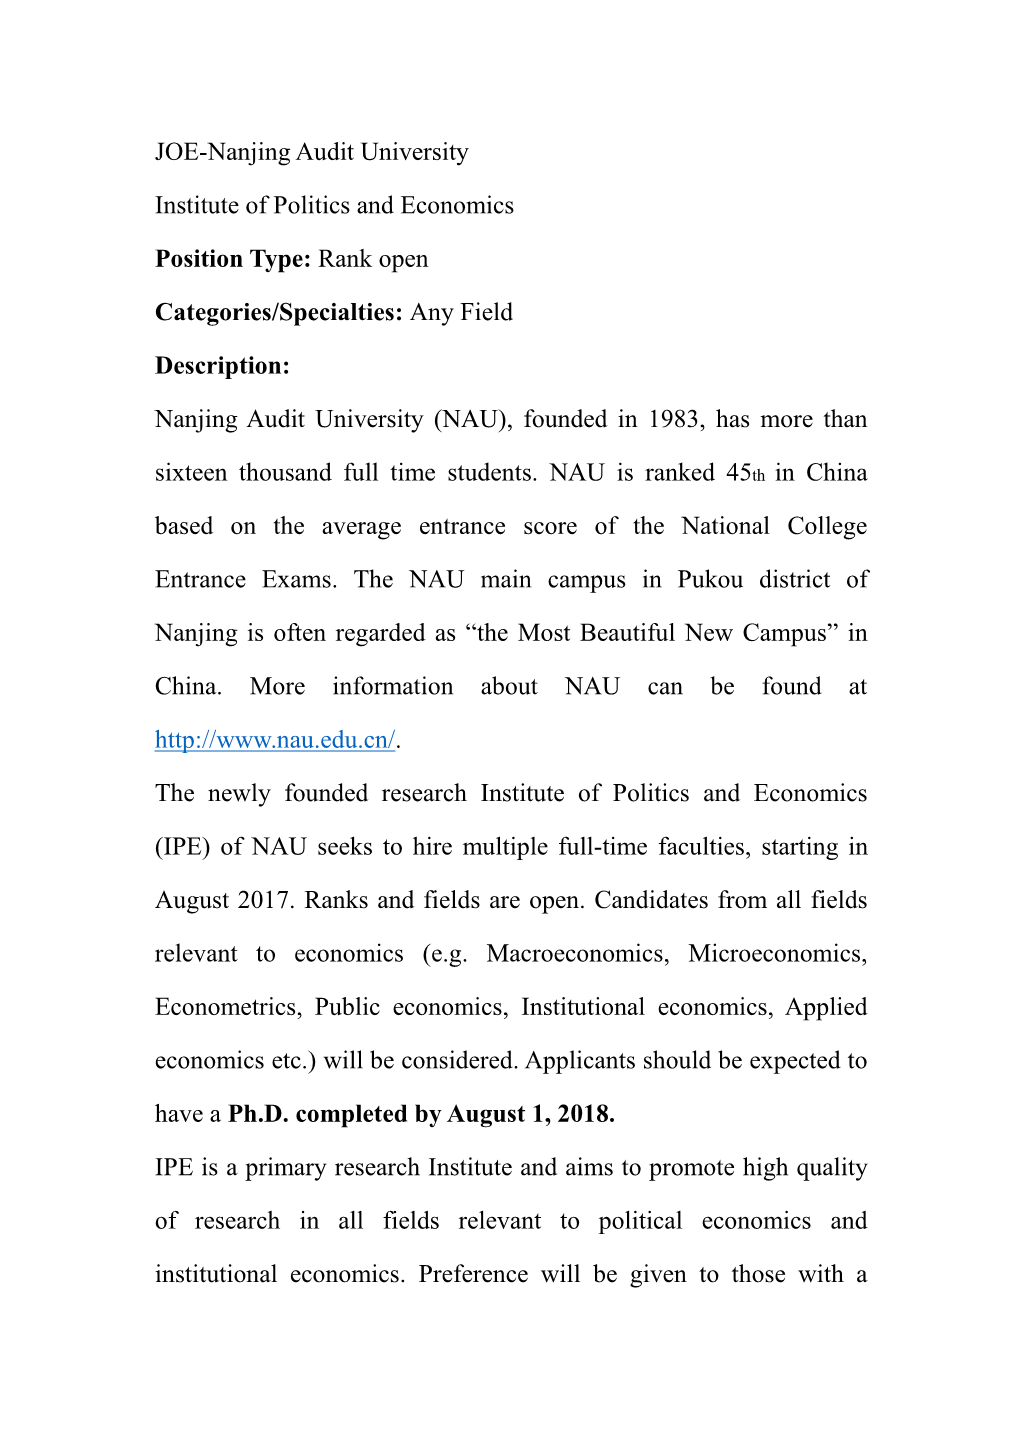 JOE-Nanjing Audit University Institute of Politics and Economics Position